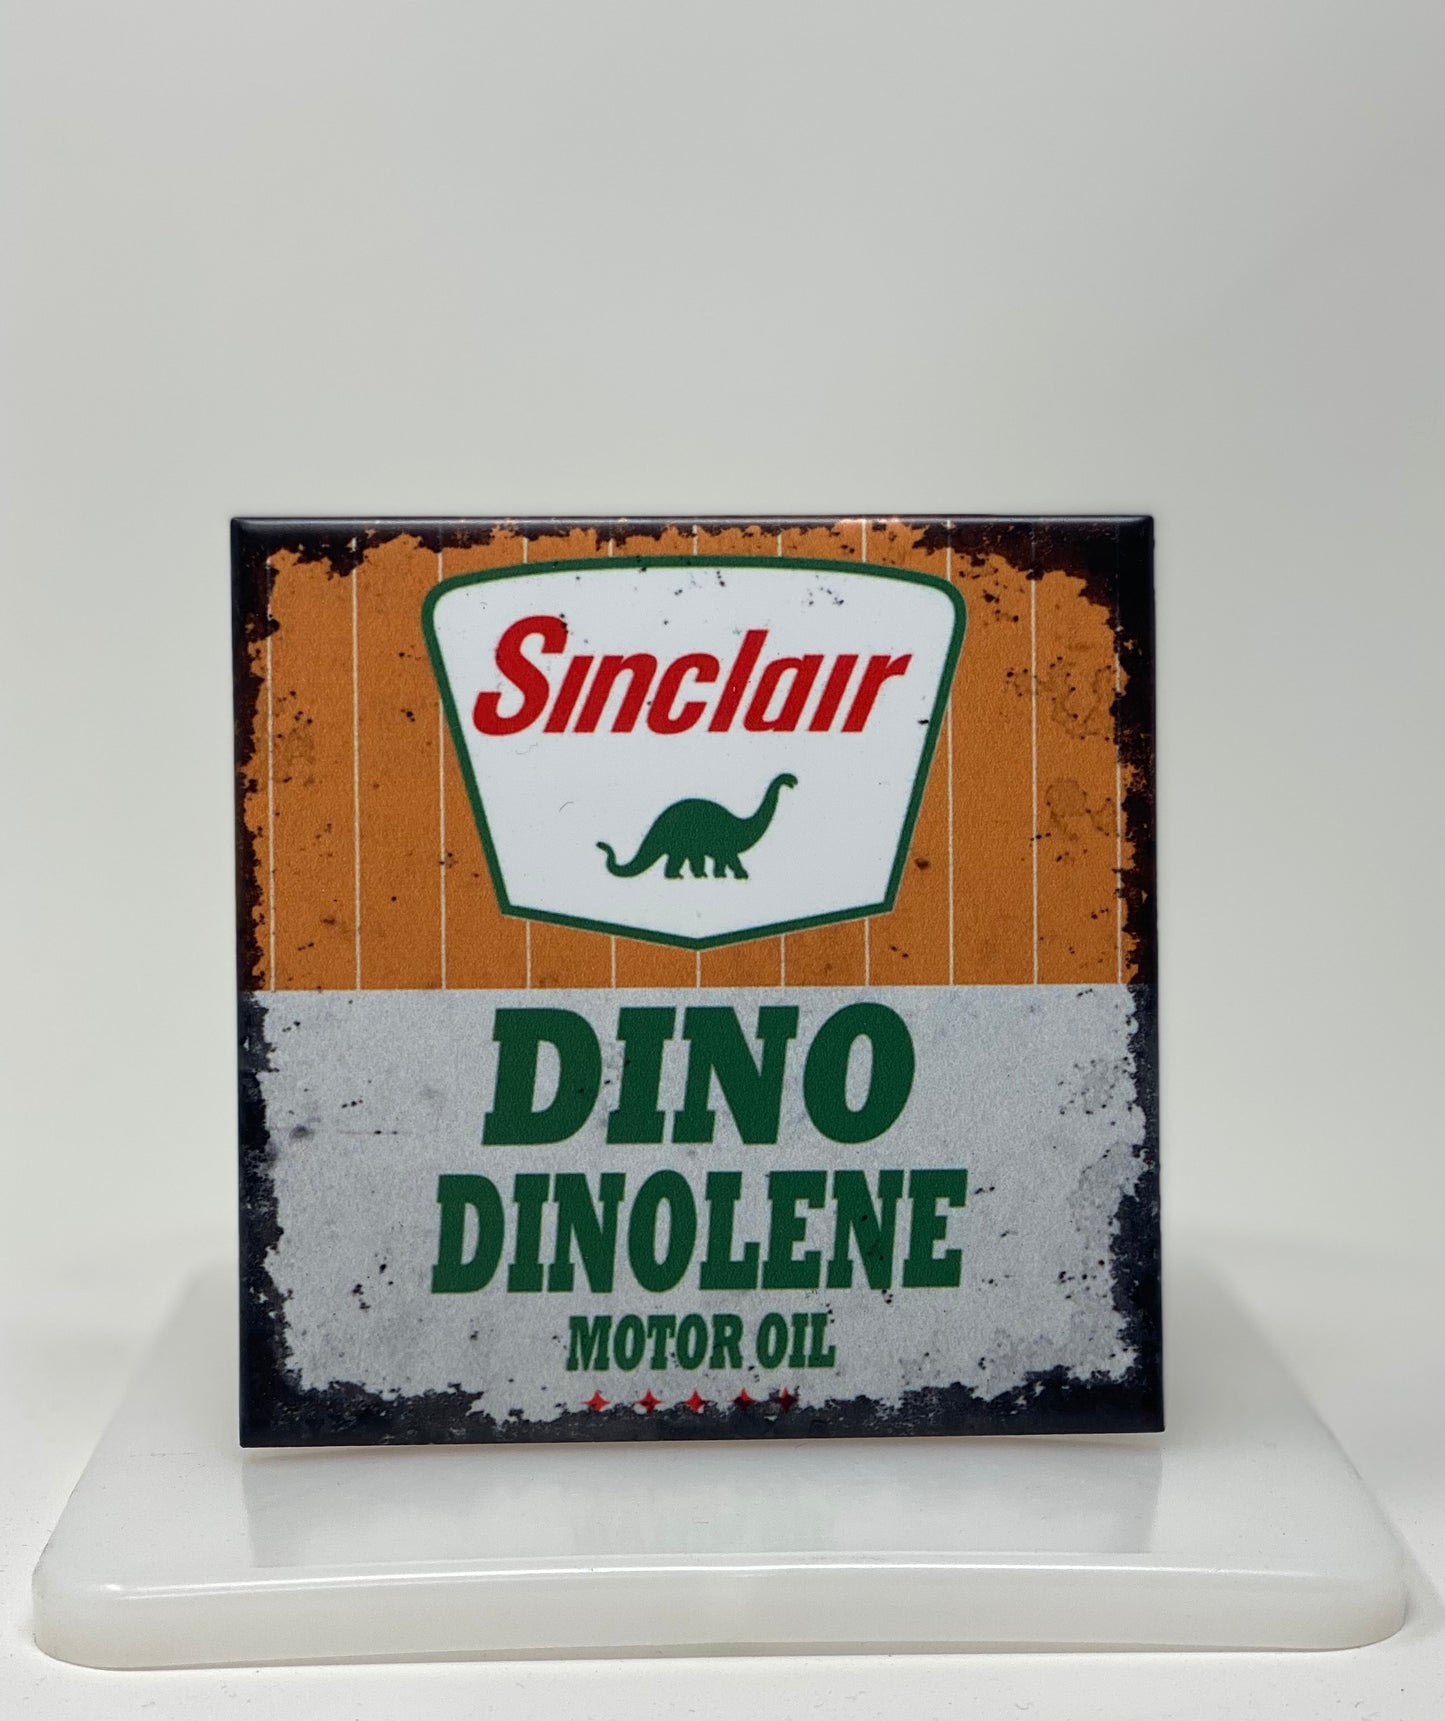 Sinclair Dino Dinolene Oil Coaster